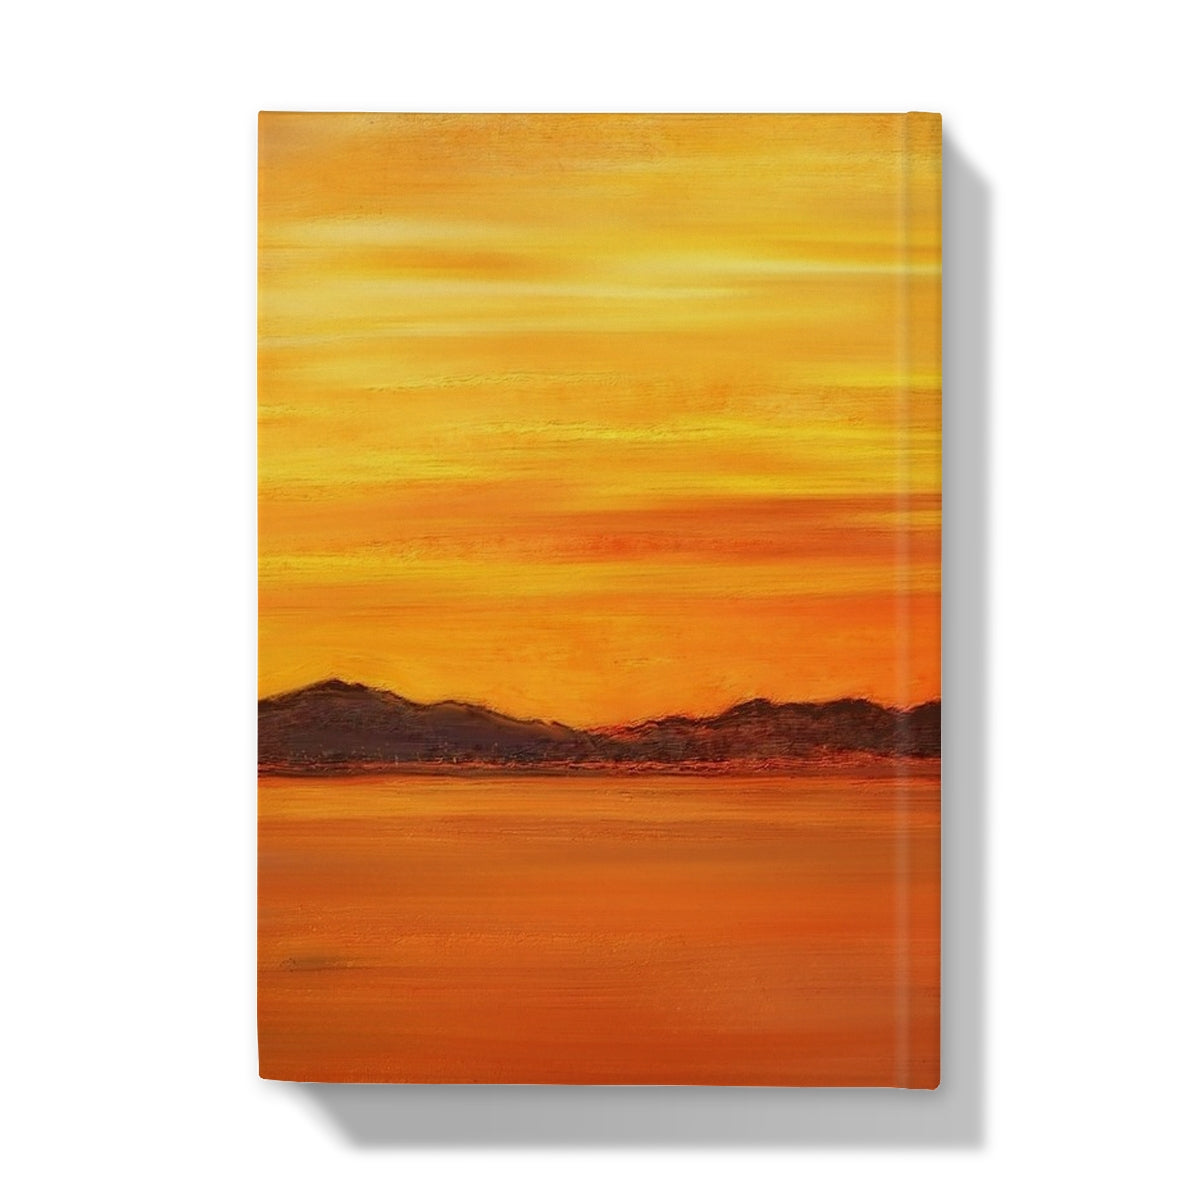 Loch Fyne Sunset Art Gifts Hardback Journal